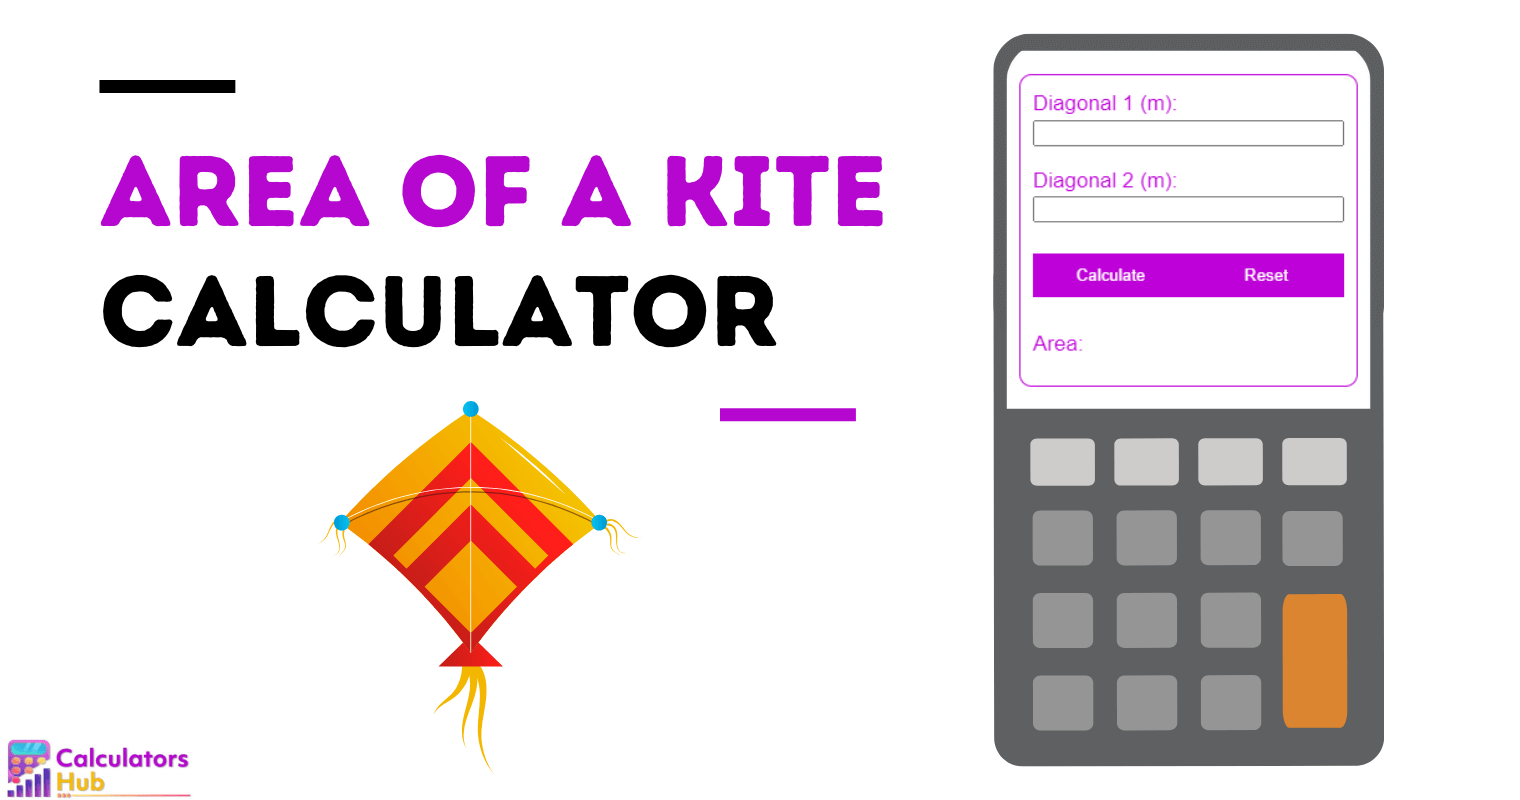 Area of a Kite Calculator